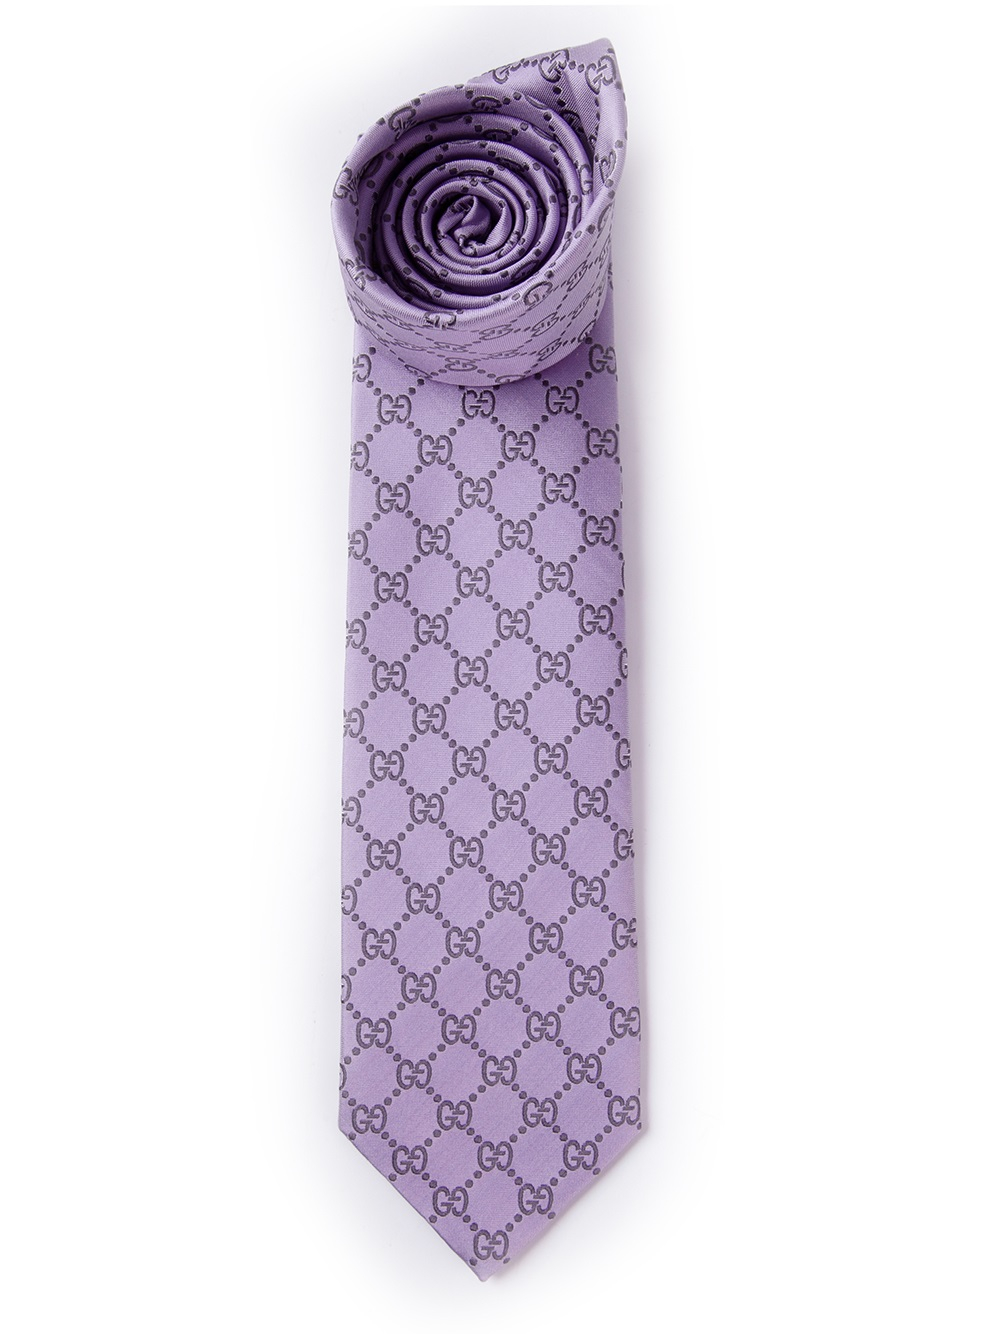 Gucci Monogram Print Tie in Pink & Purple (Purple) for Men - Lyst